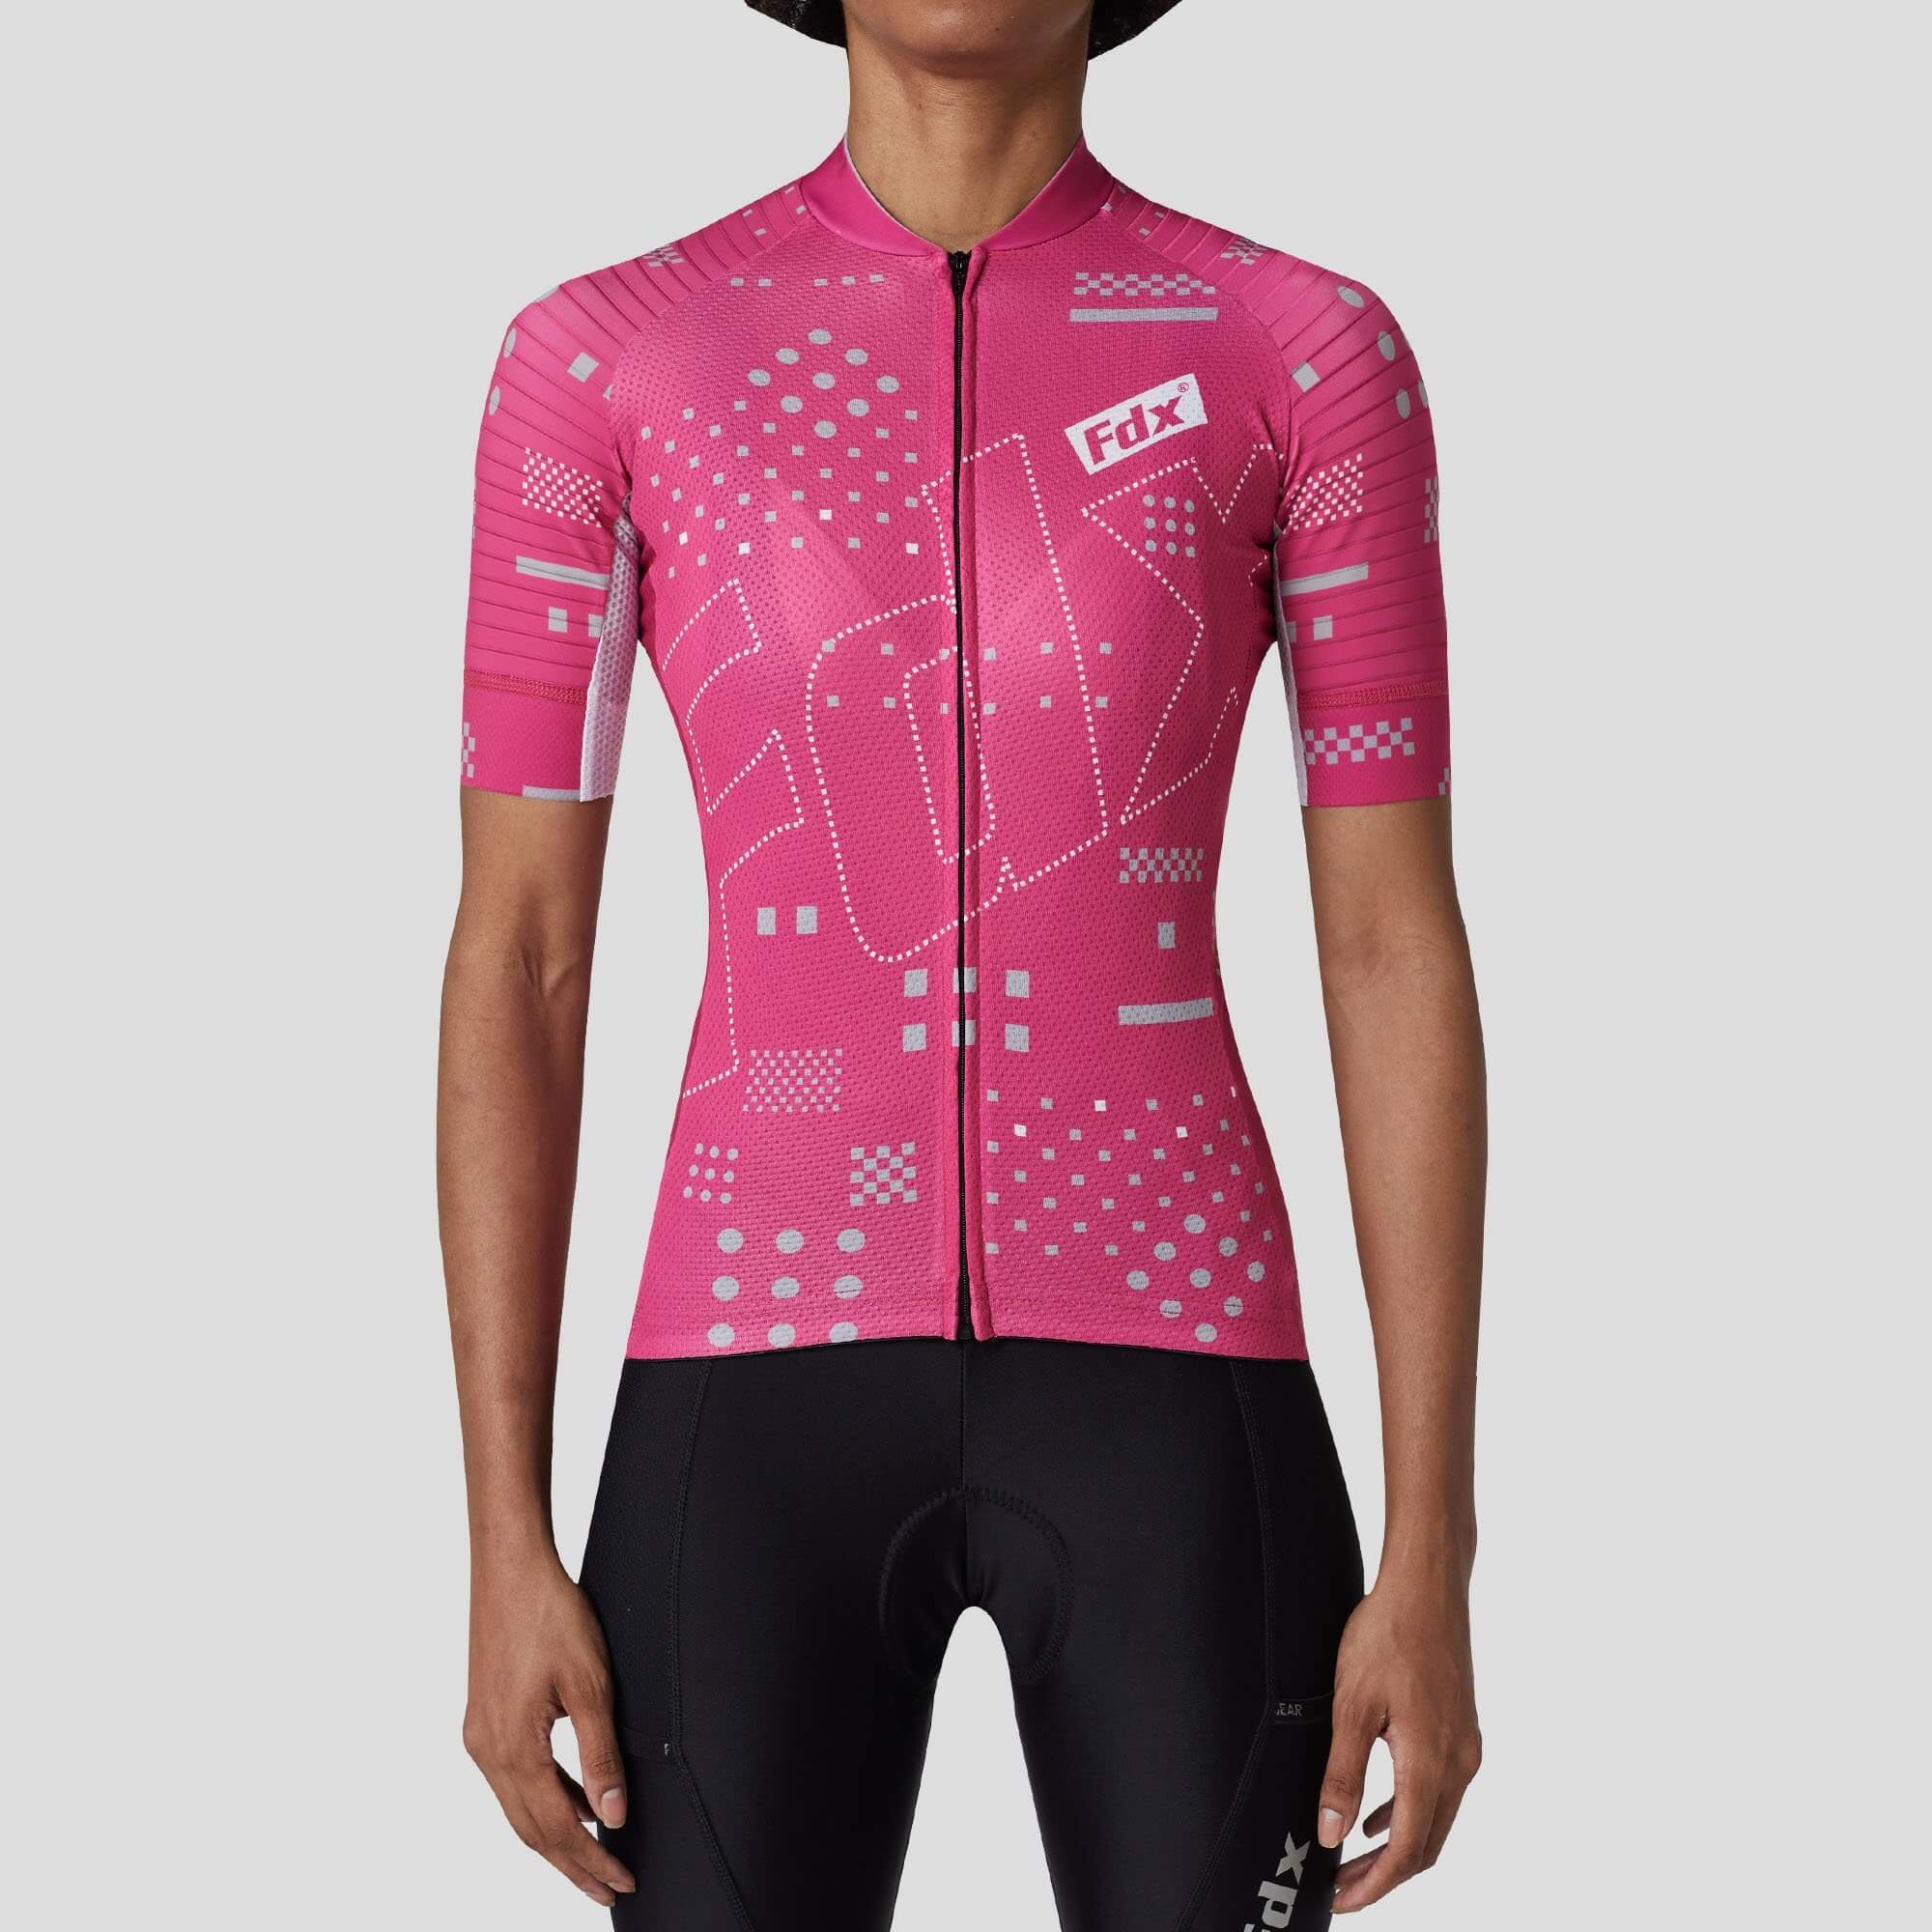 Fdx Women's Pink Short Sleeve Cycling Jersey & Gel Padded Bib Shorts Best Summer Road Bike Wear Light Weight, Hi-viz Reflectors & Pockets - All Day